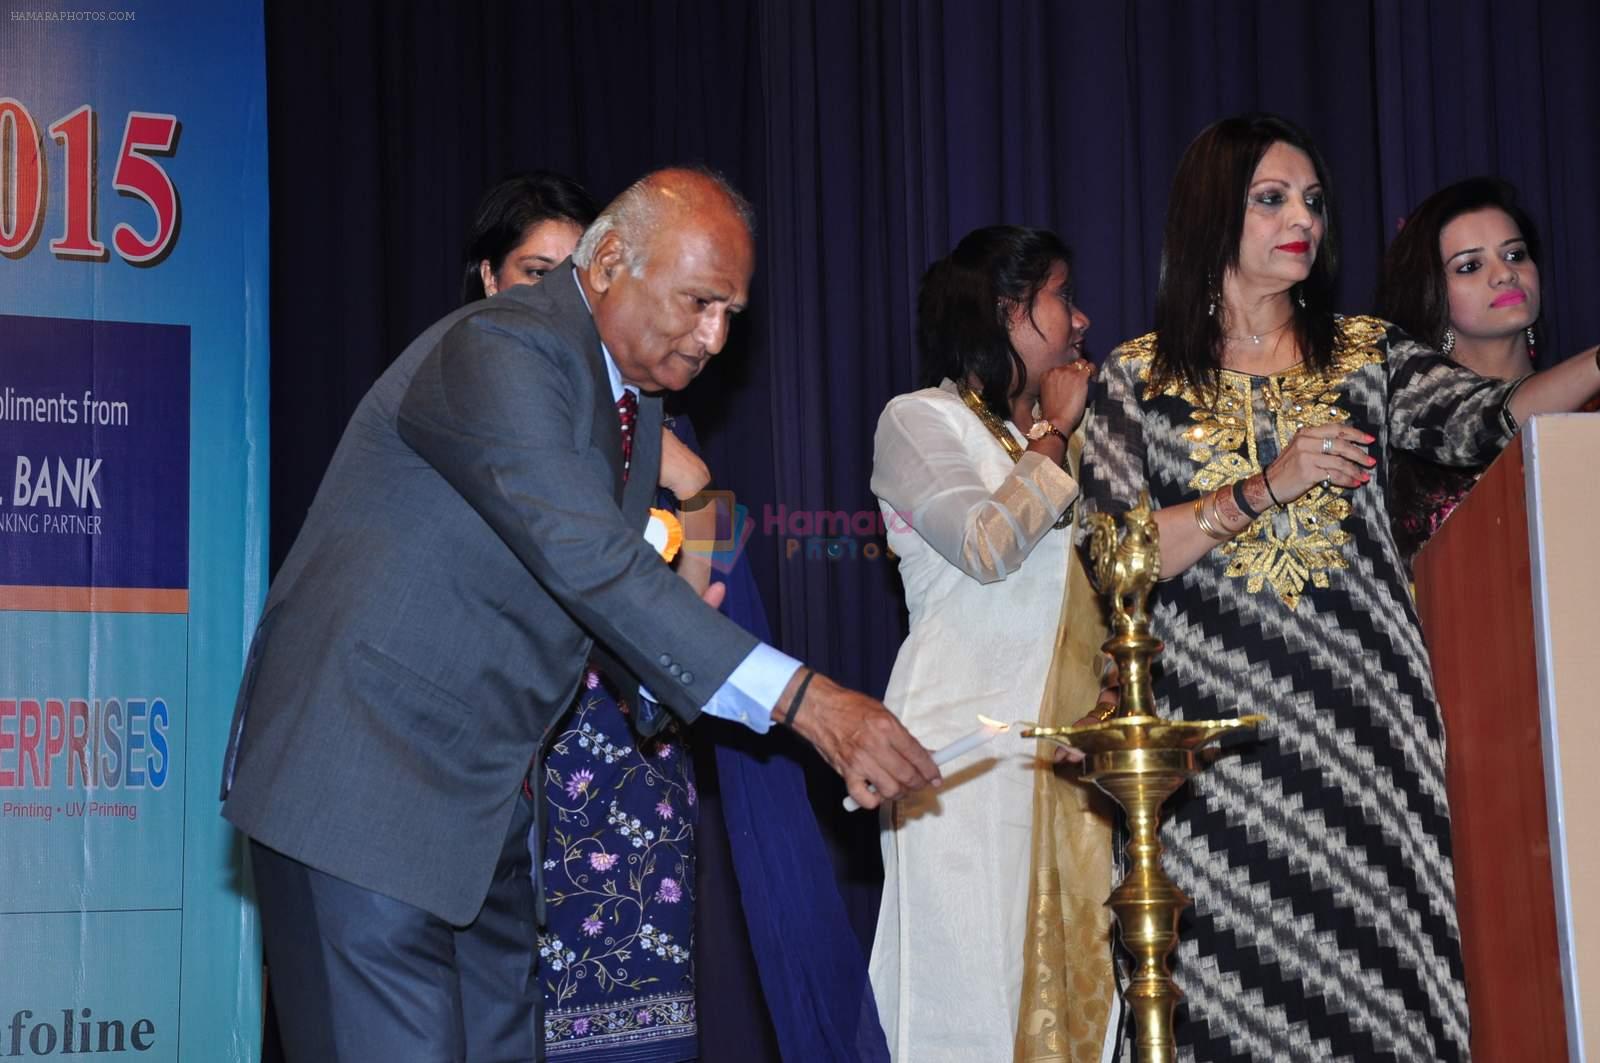 Priya Dutt at Rasthra shakti award in Mumbai on 16th Dec 2015